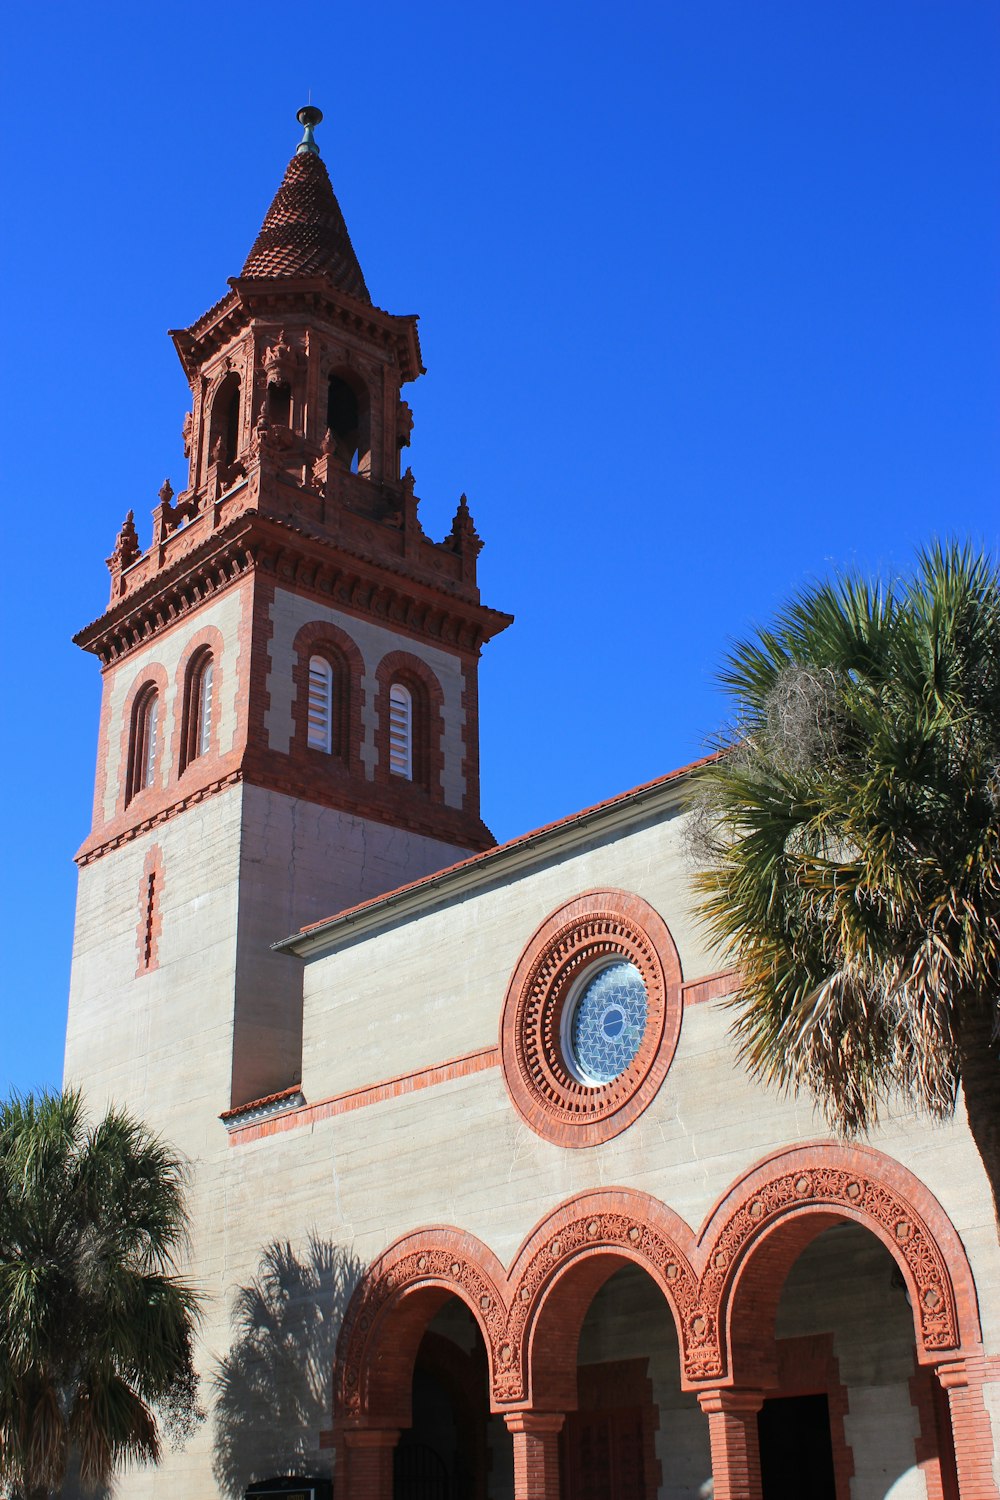 vista da igreja pintada de marrom e branco